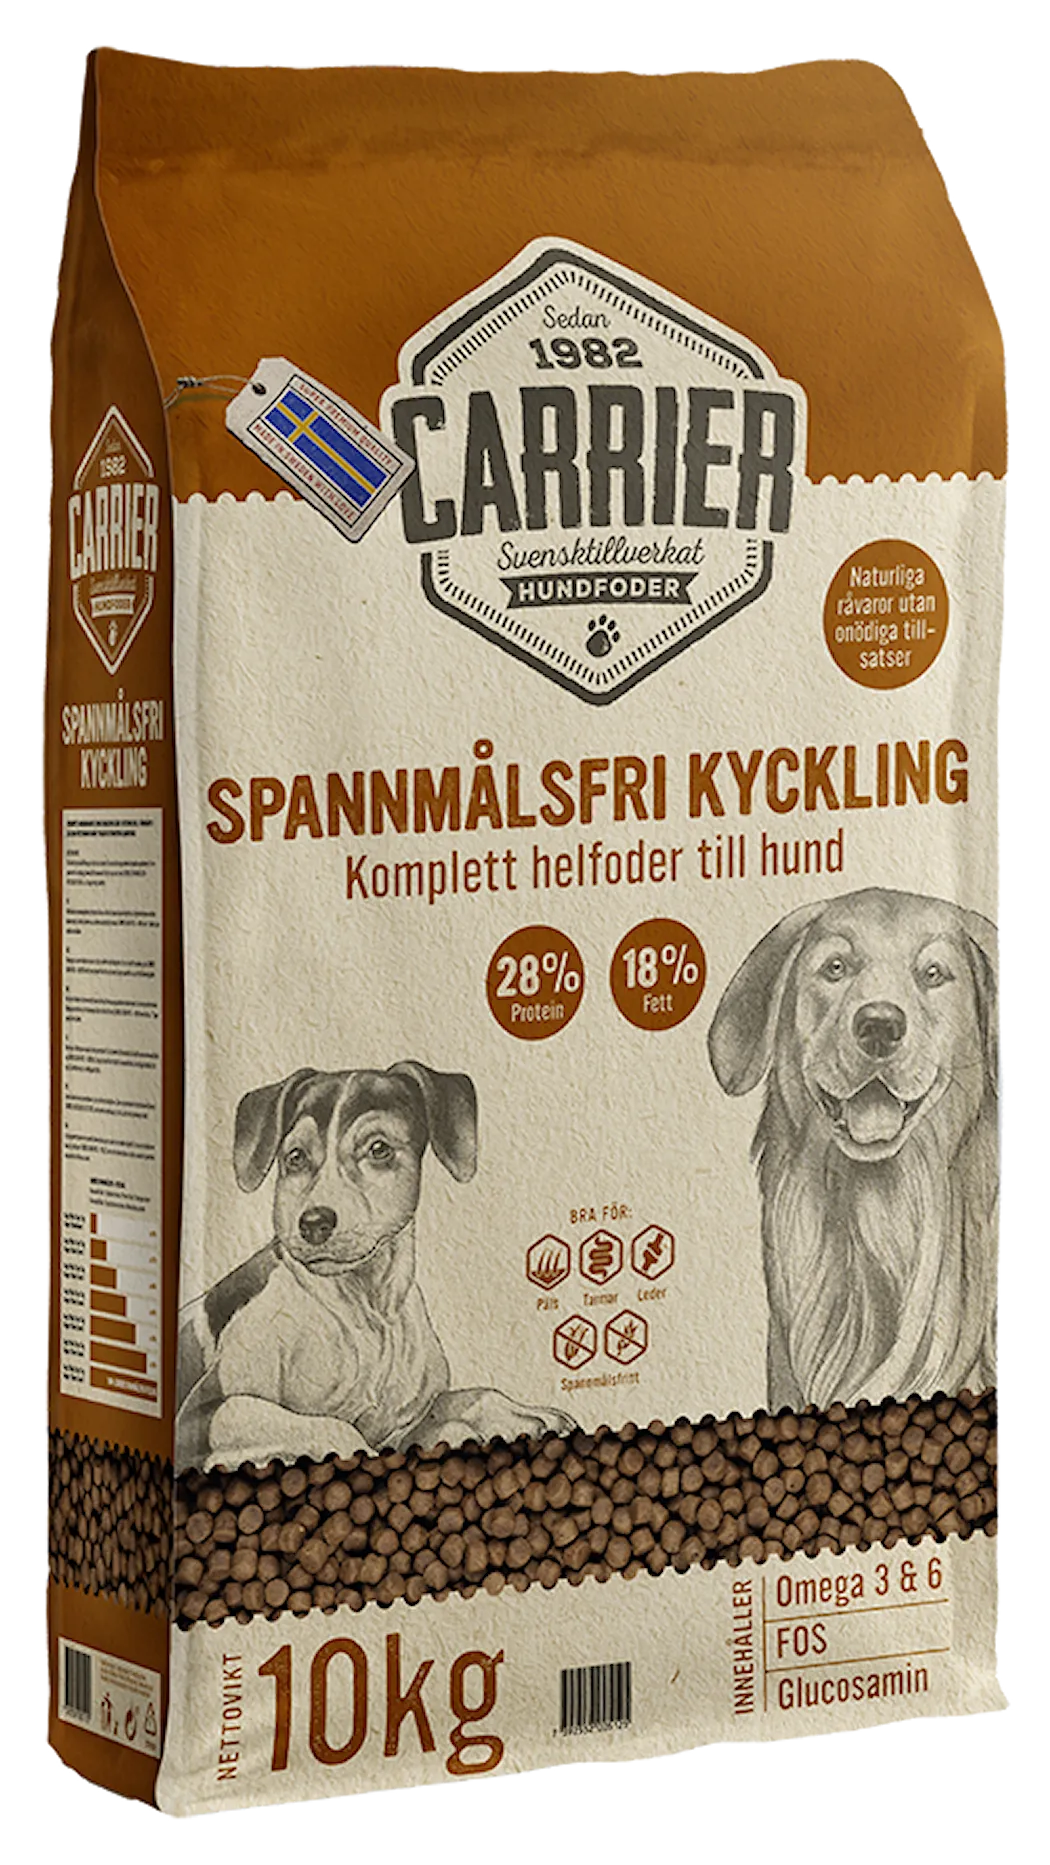 Carrier Kornfri kylling